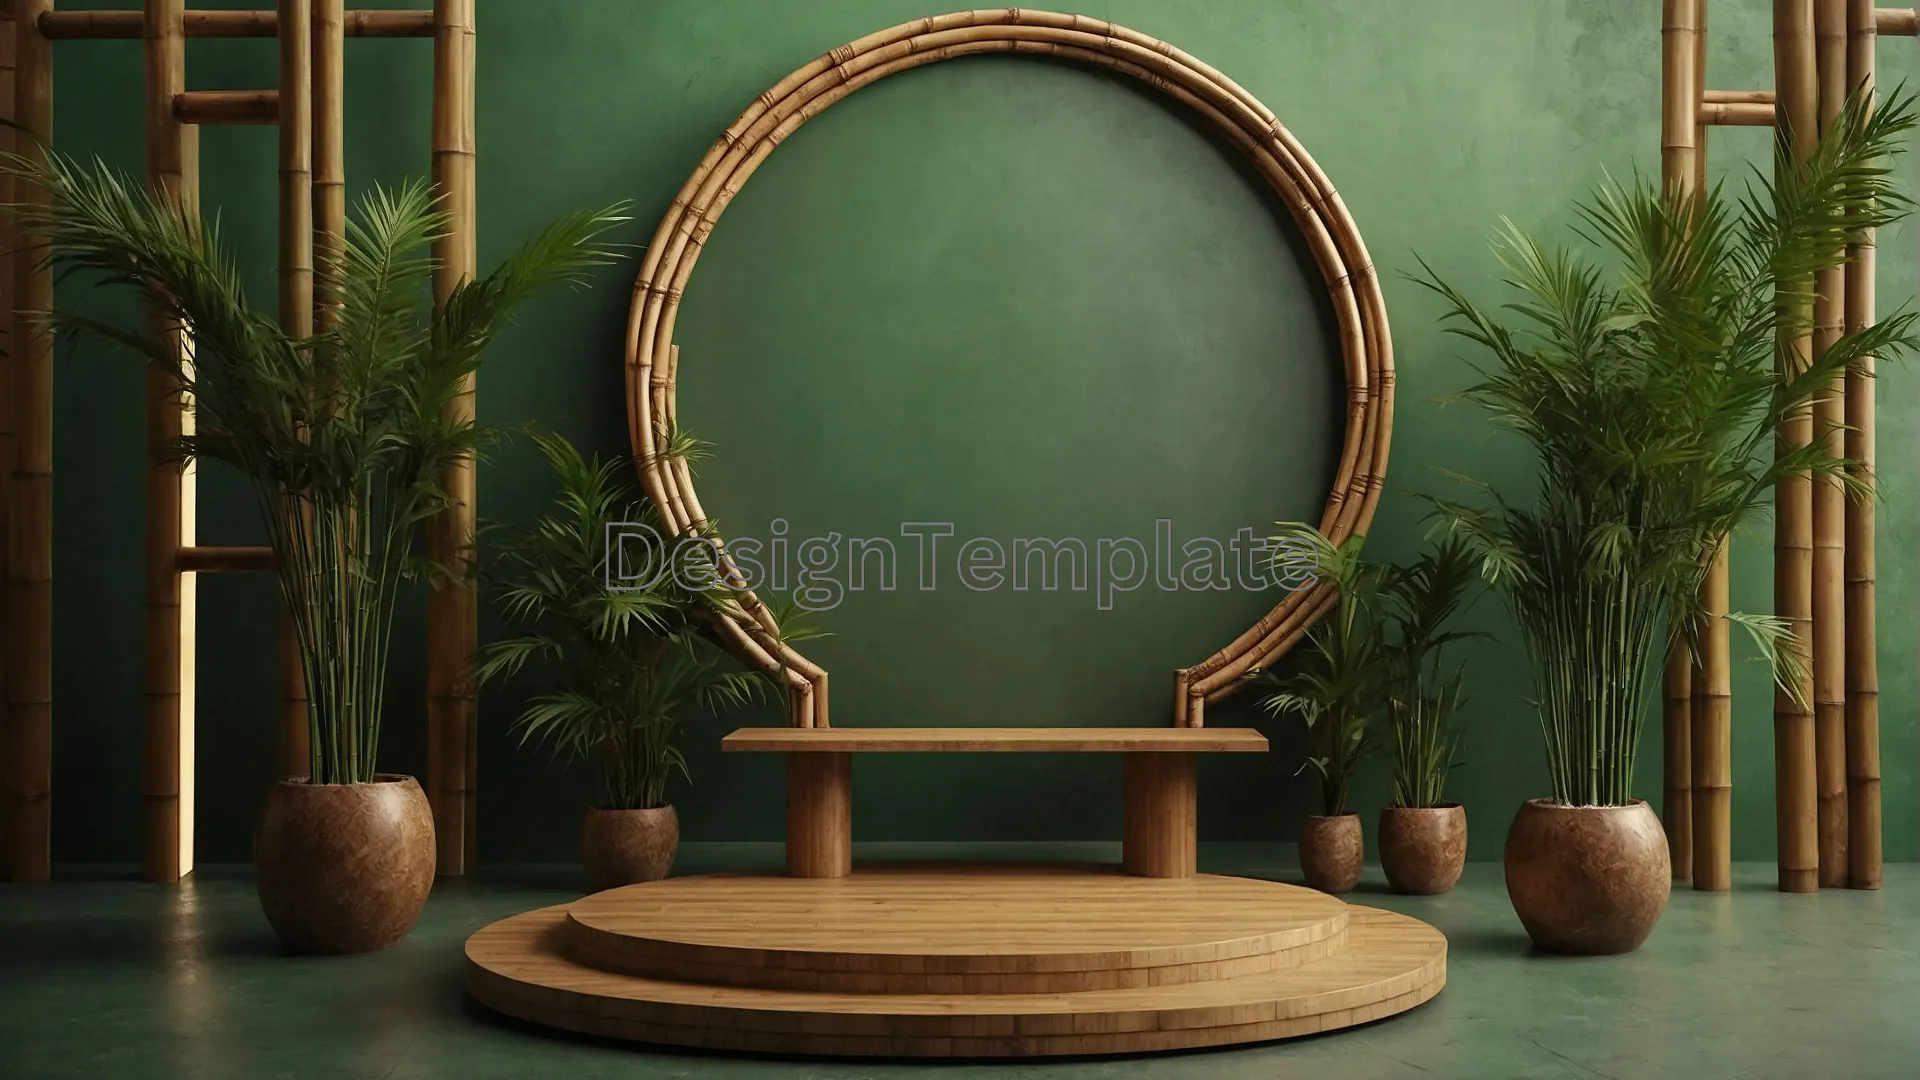 Zen Plant and Mirror Arrangement Serene Background Photo image